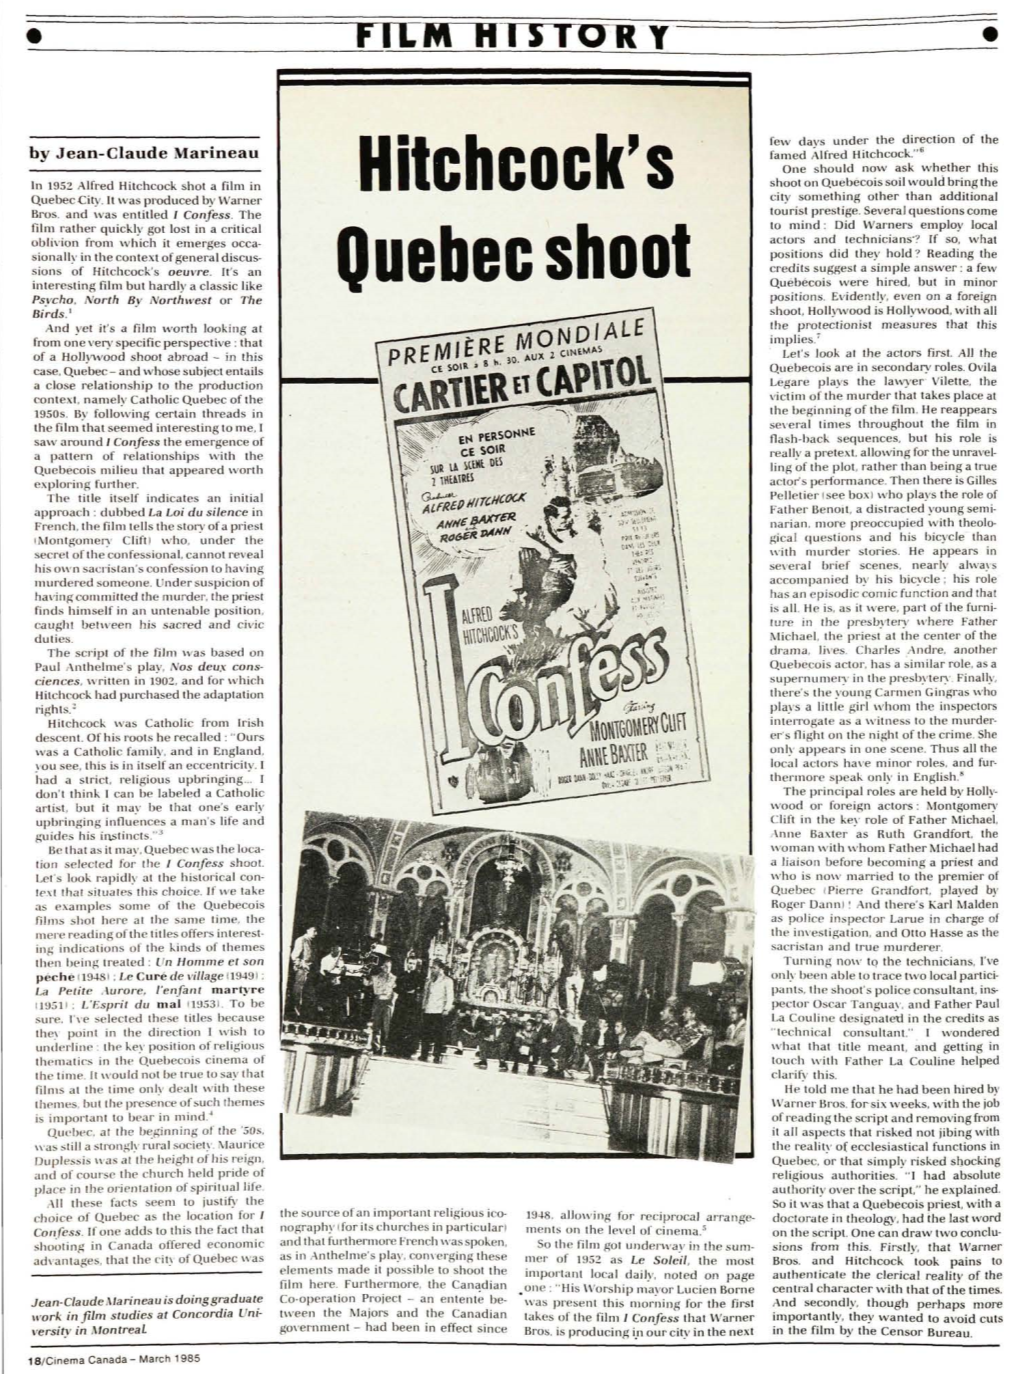 Hitchcock's Quebec Shoot